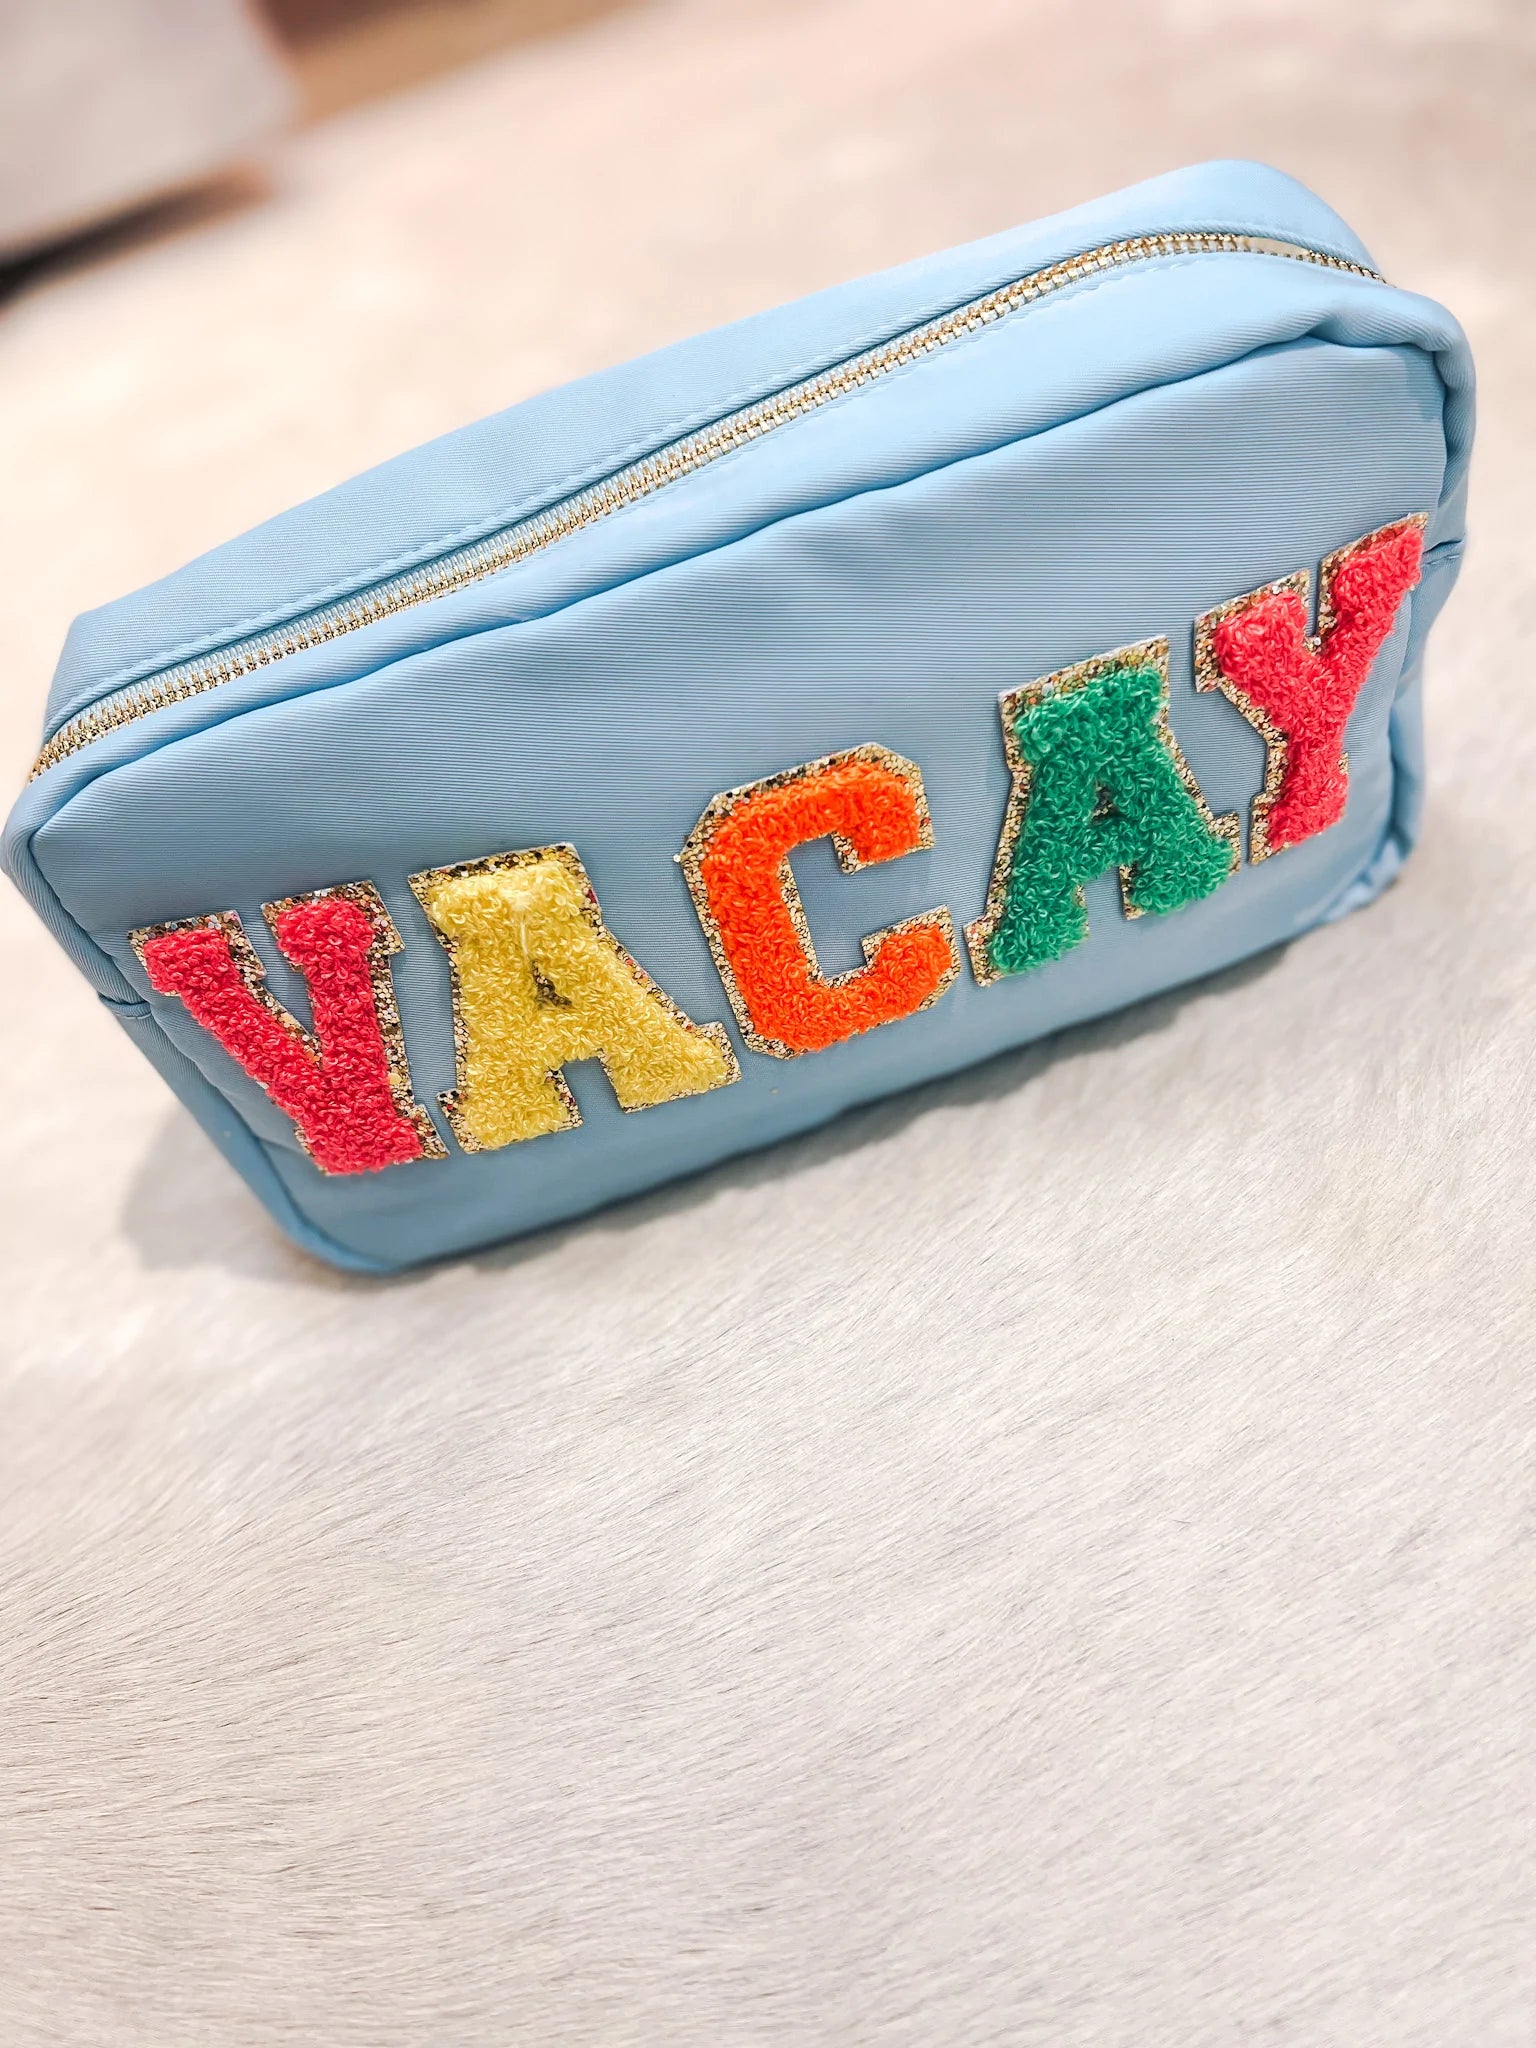 VACAY Cosmetic Bag